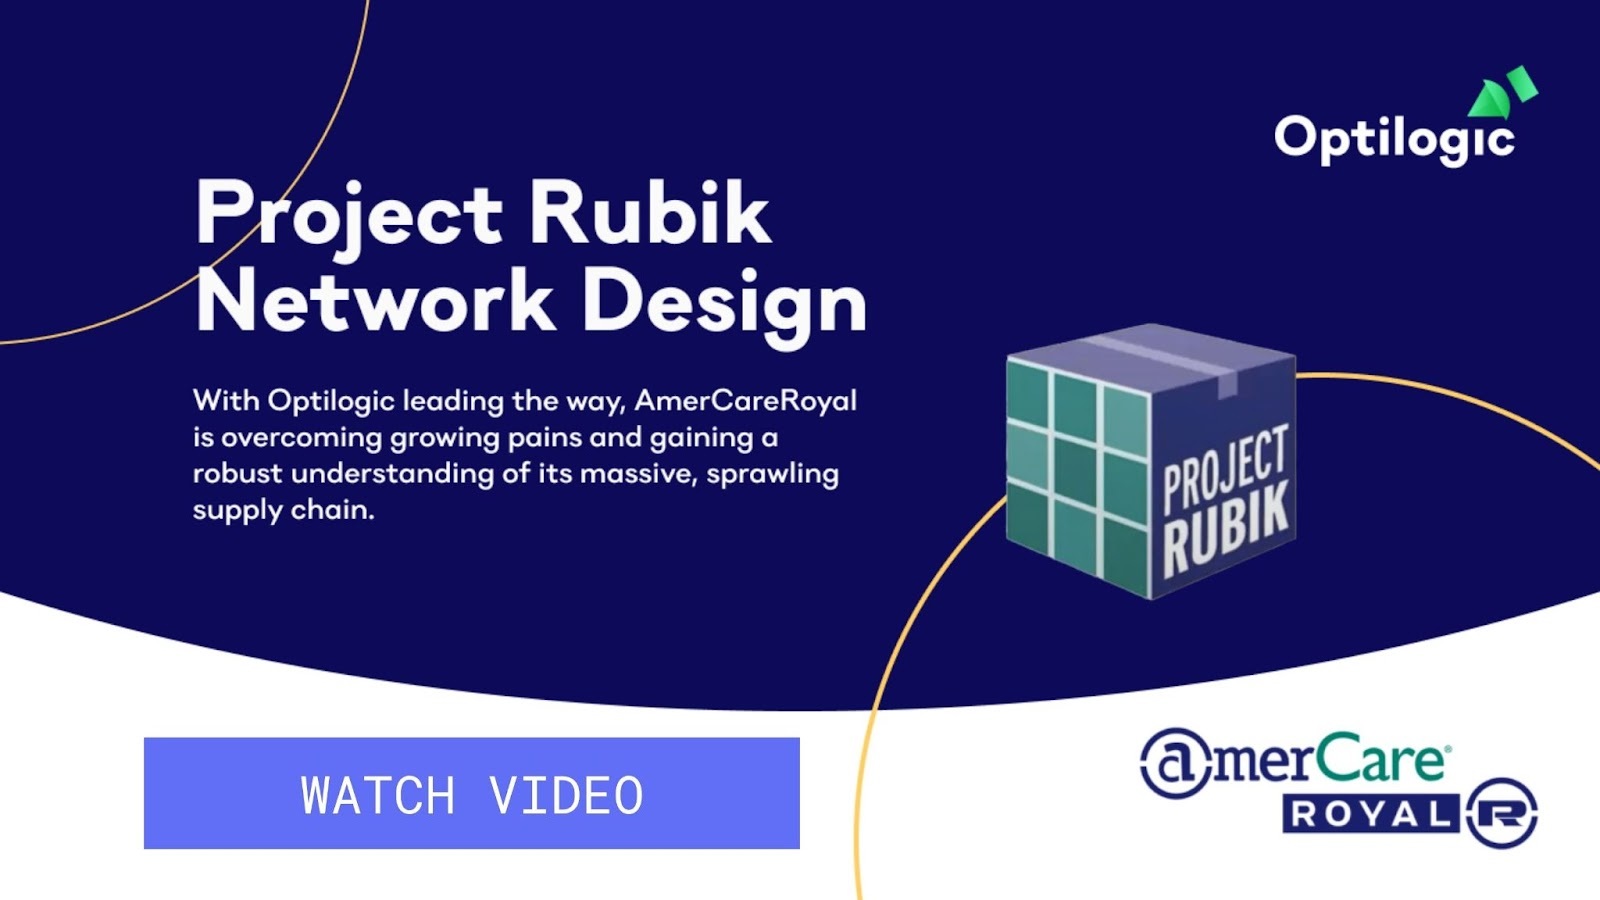 Project Rubik Network Design